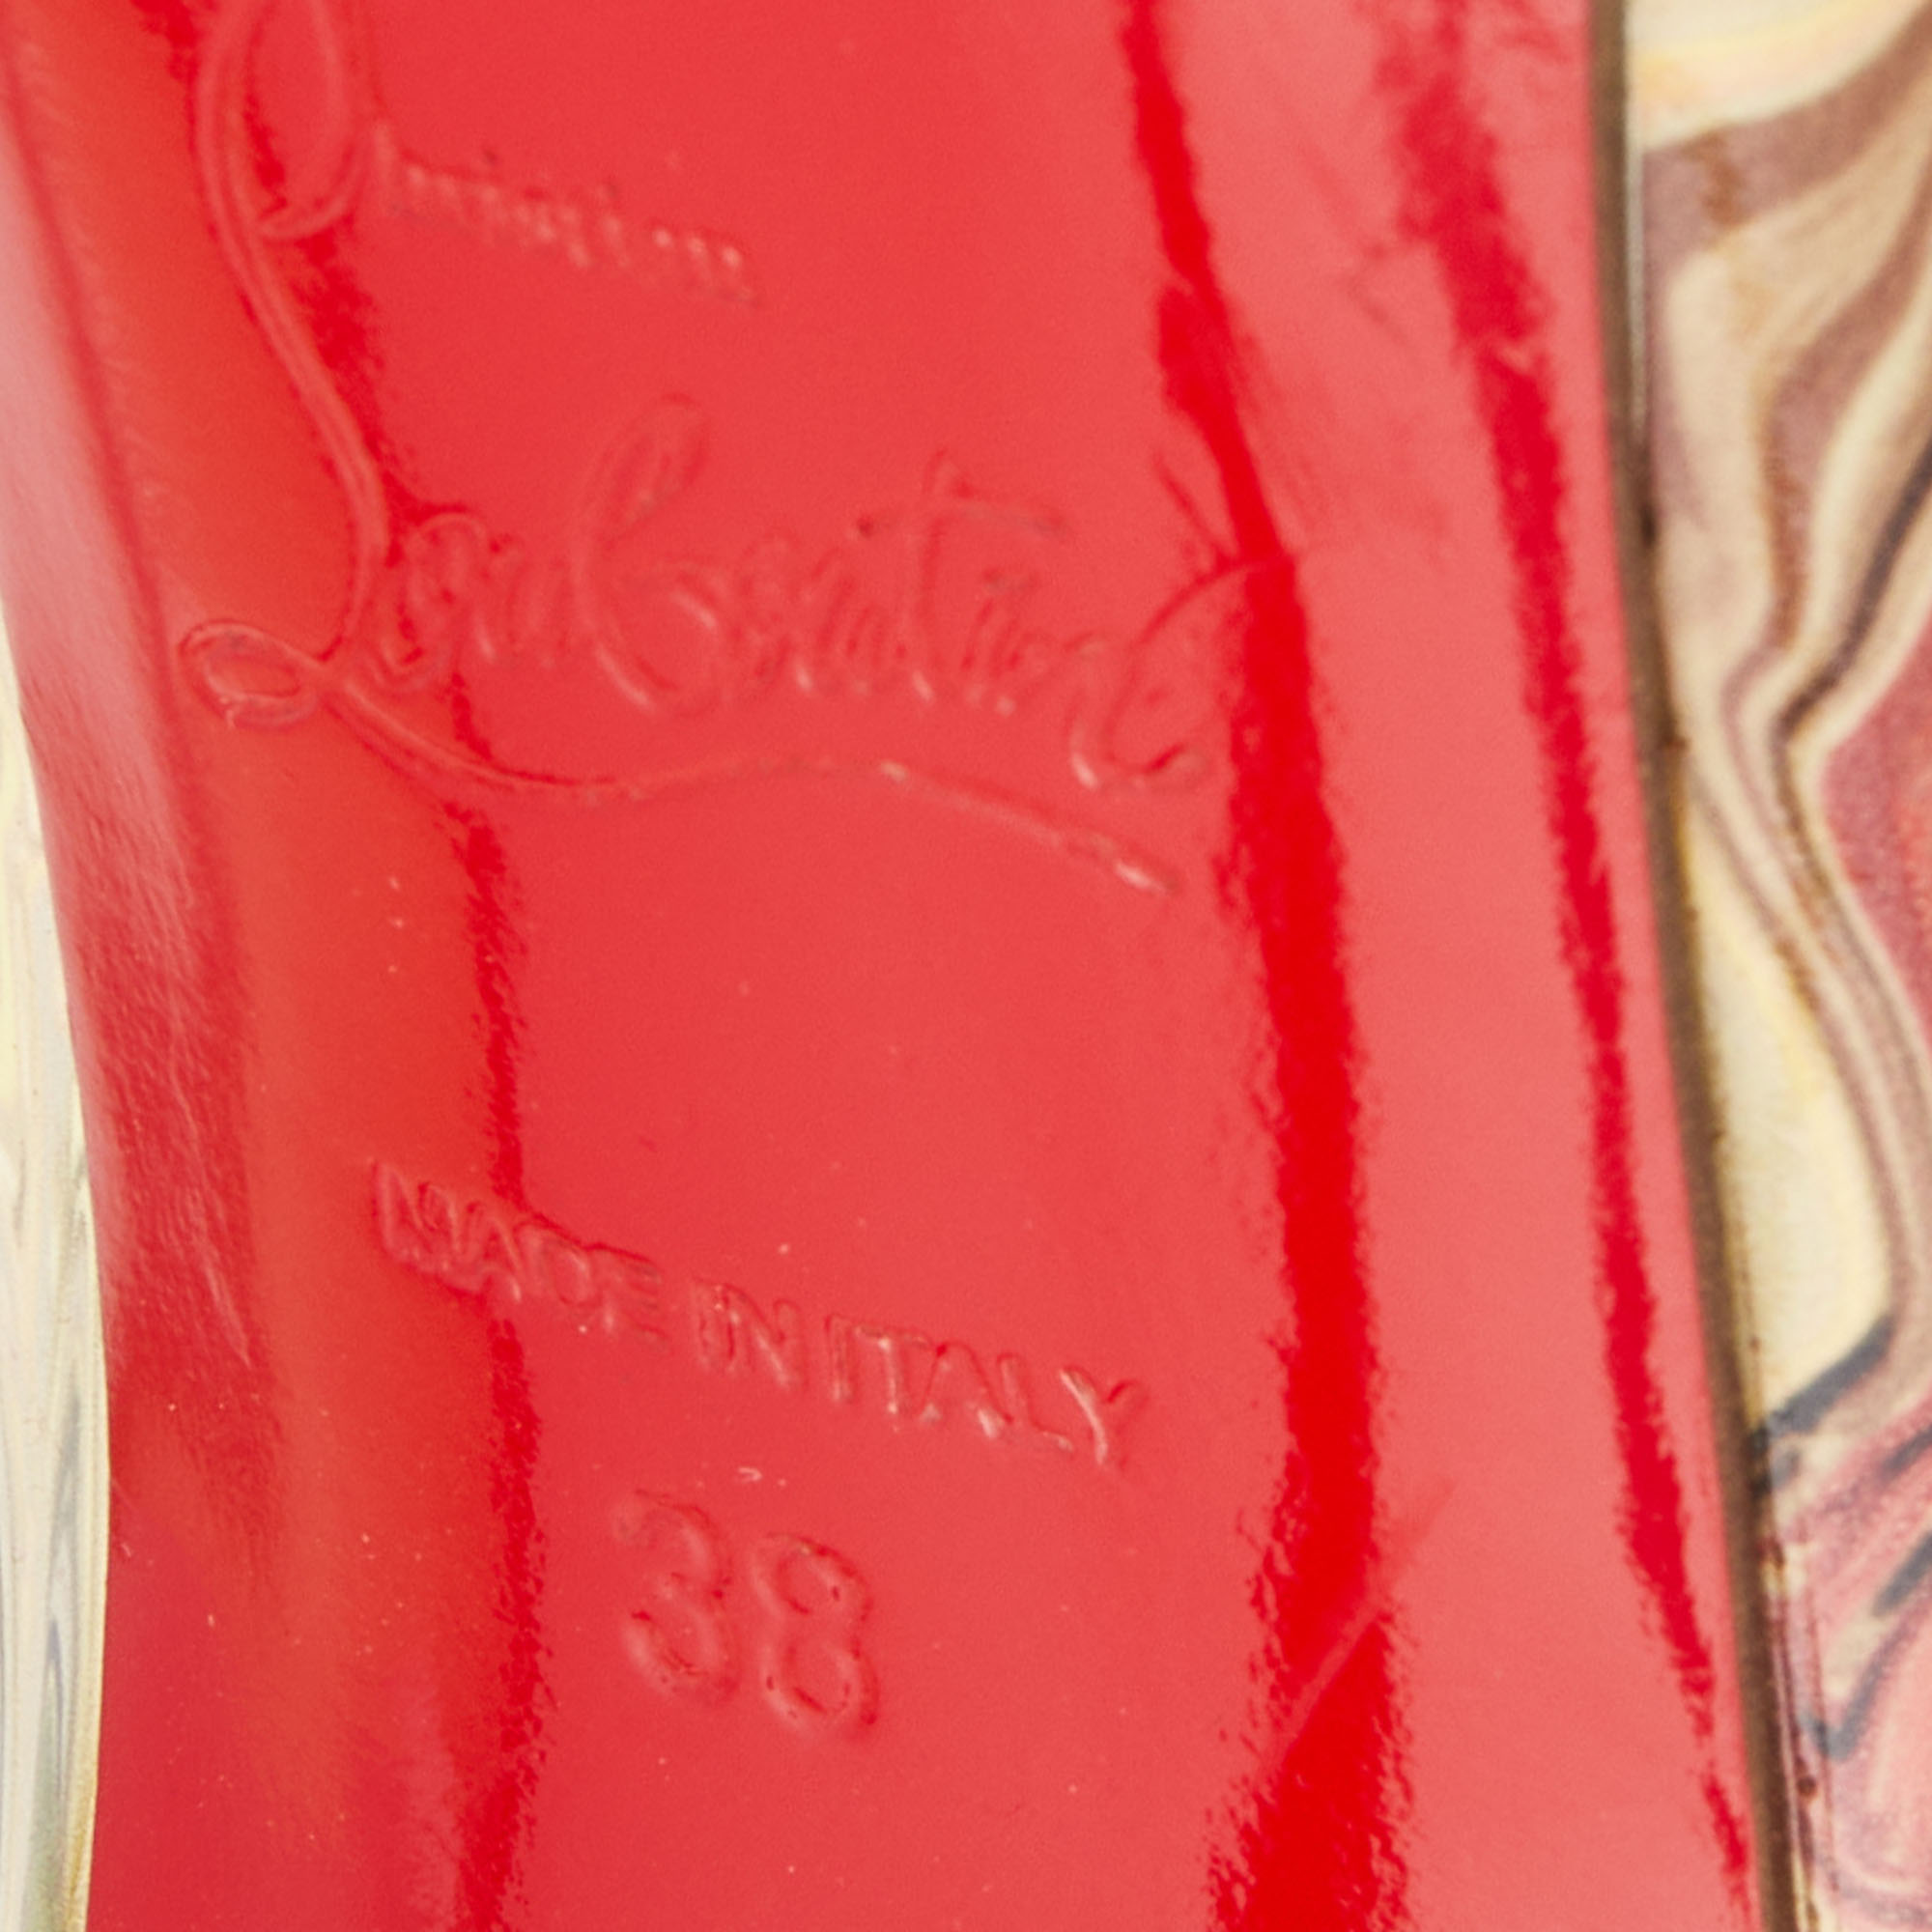 Christian Louboutin Multicolor Marble Print Patent Leather Fifi Pumps Size 38